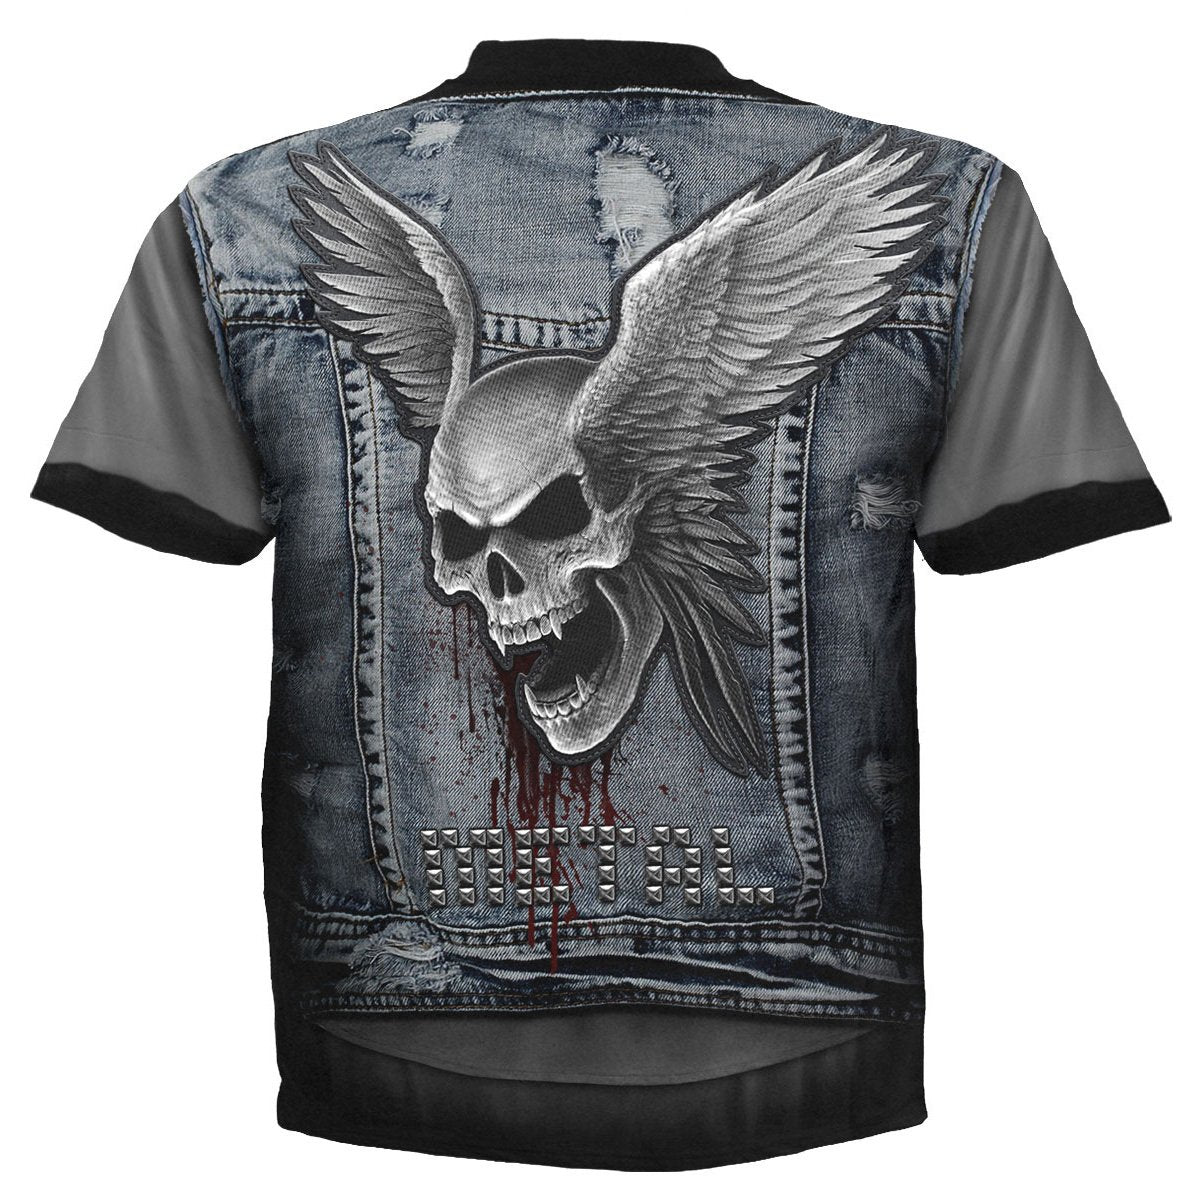 THRASH METAL - Allover T-Shirt Black - Spiral USA